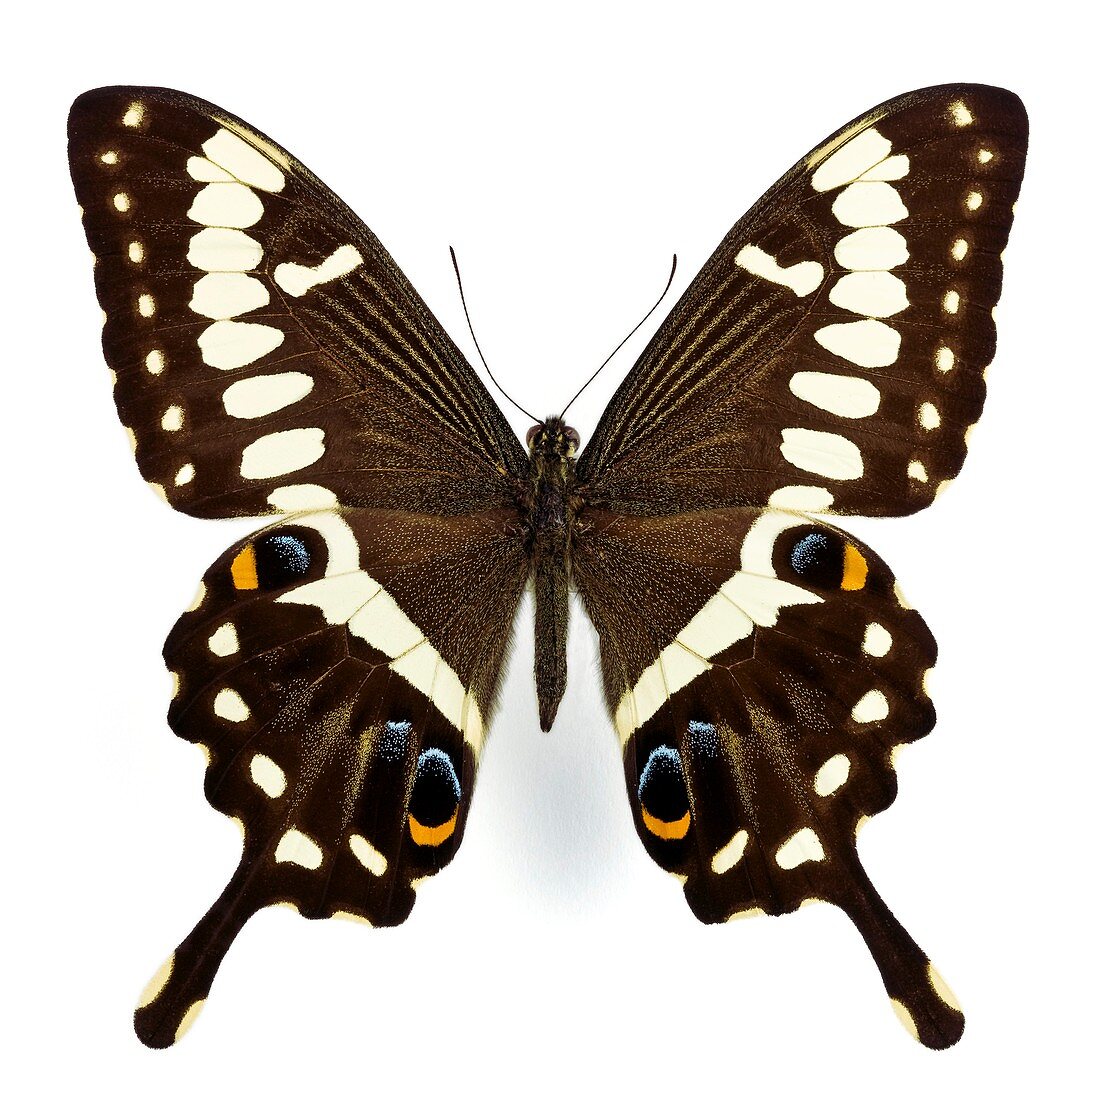 Emperor swallowtail butterfly